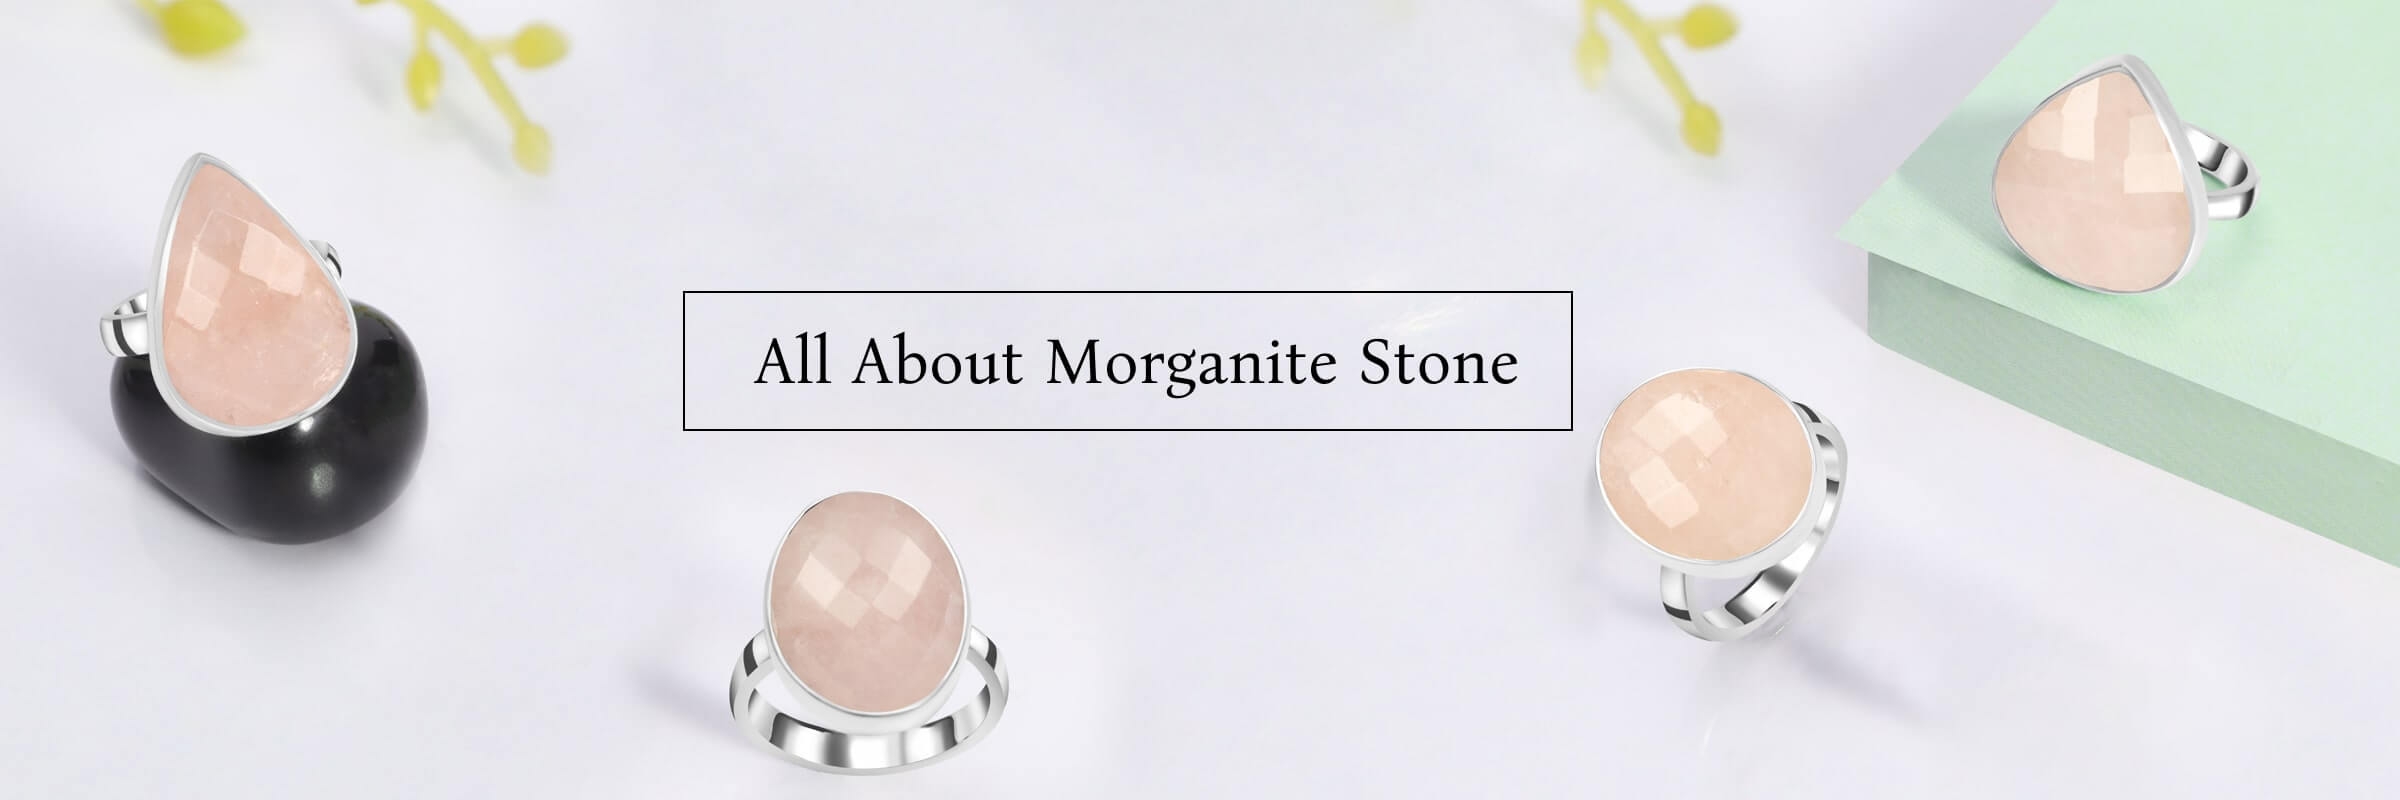 Morganite Gemstone: Value, History, Used, & Meaning 1